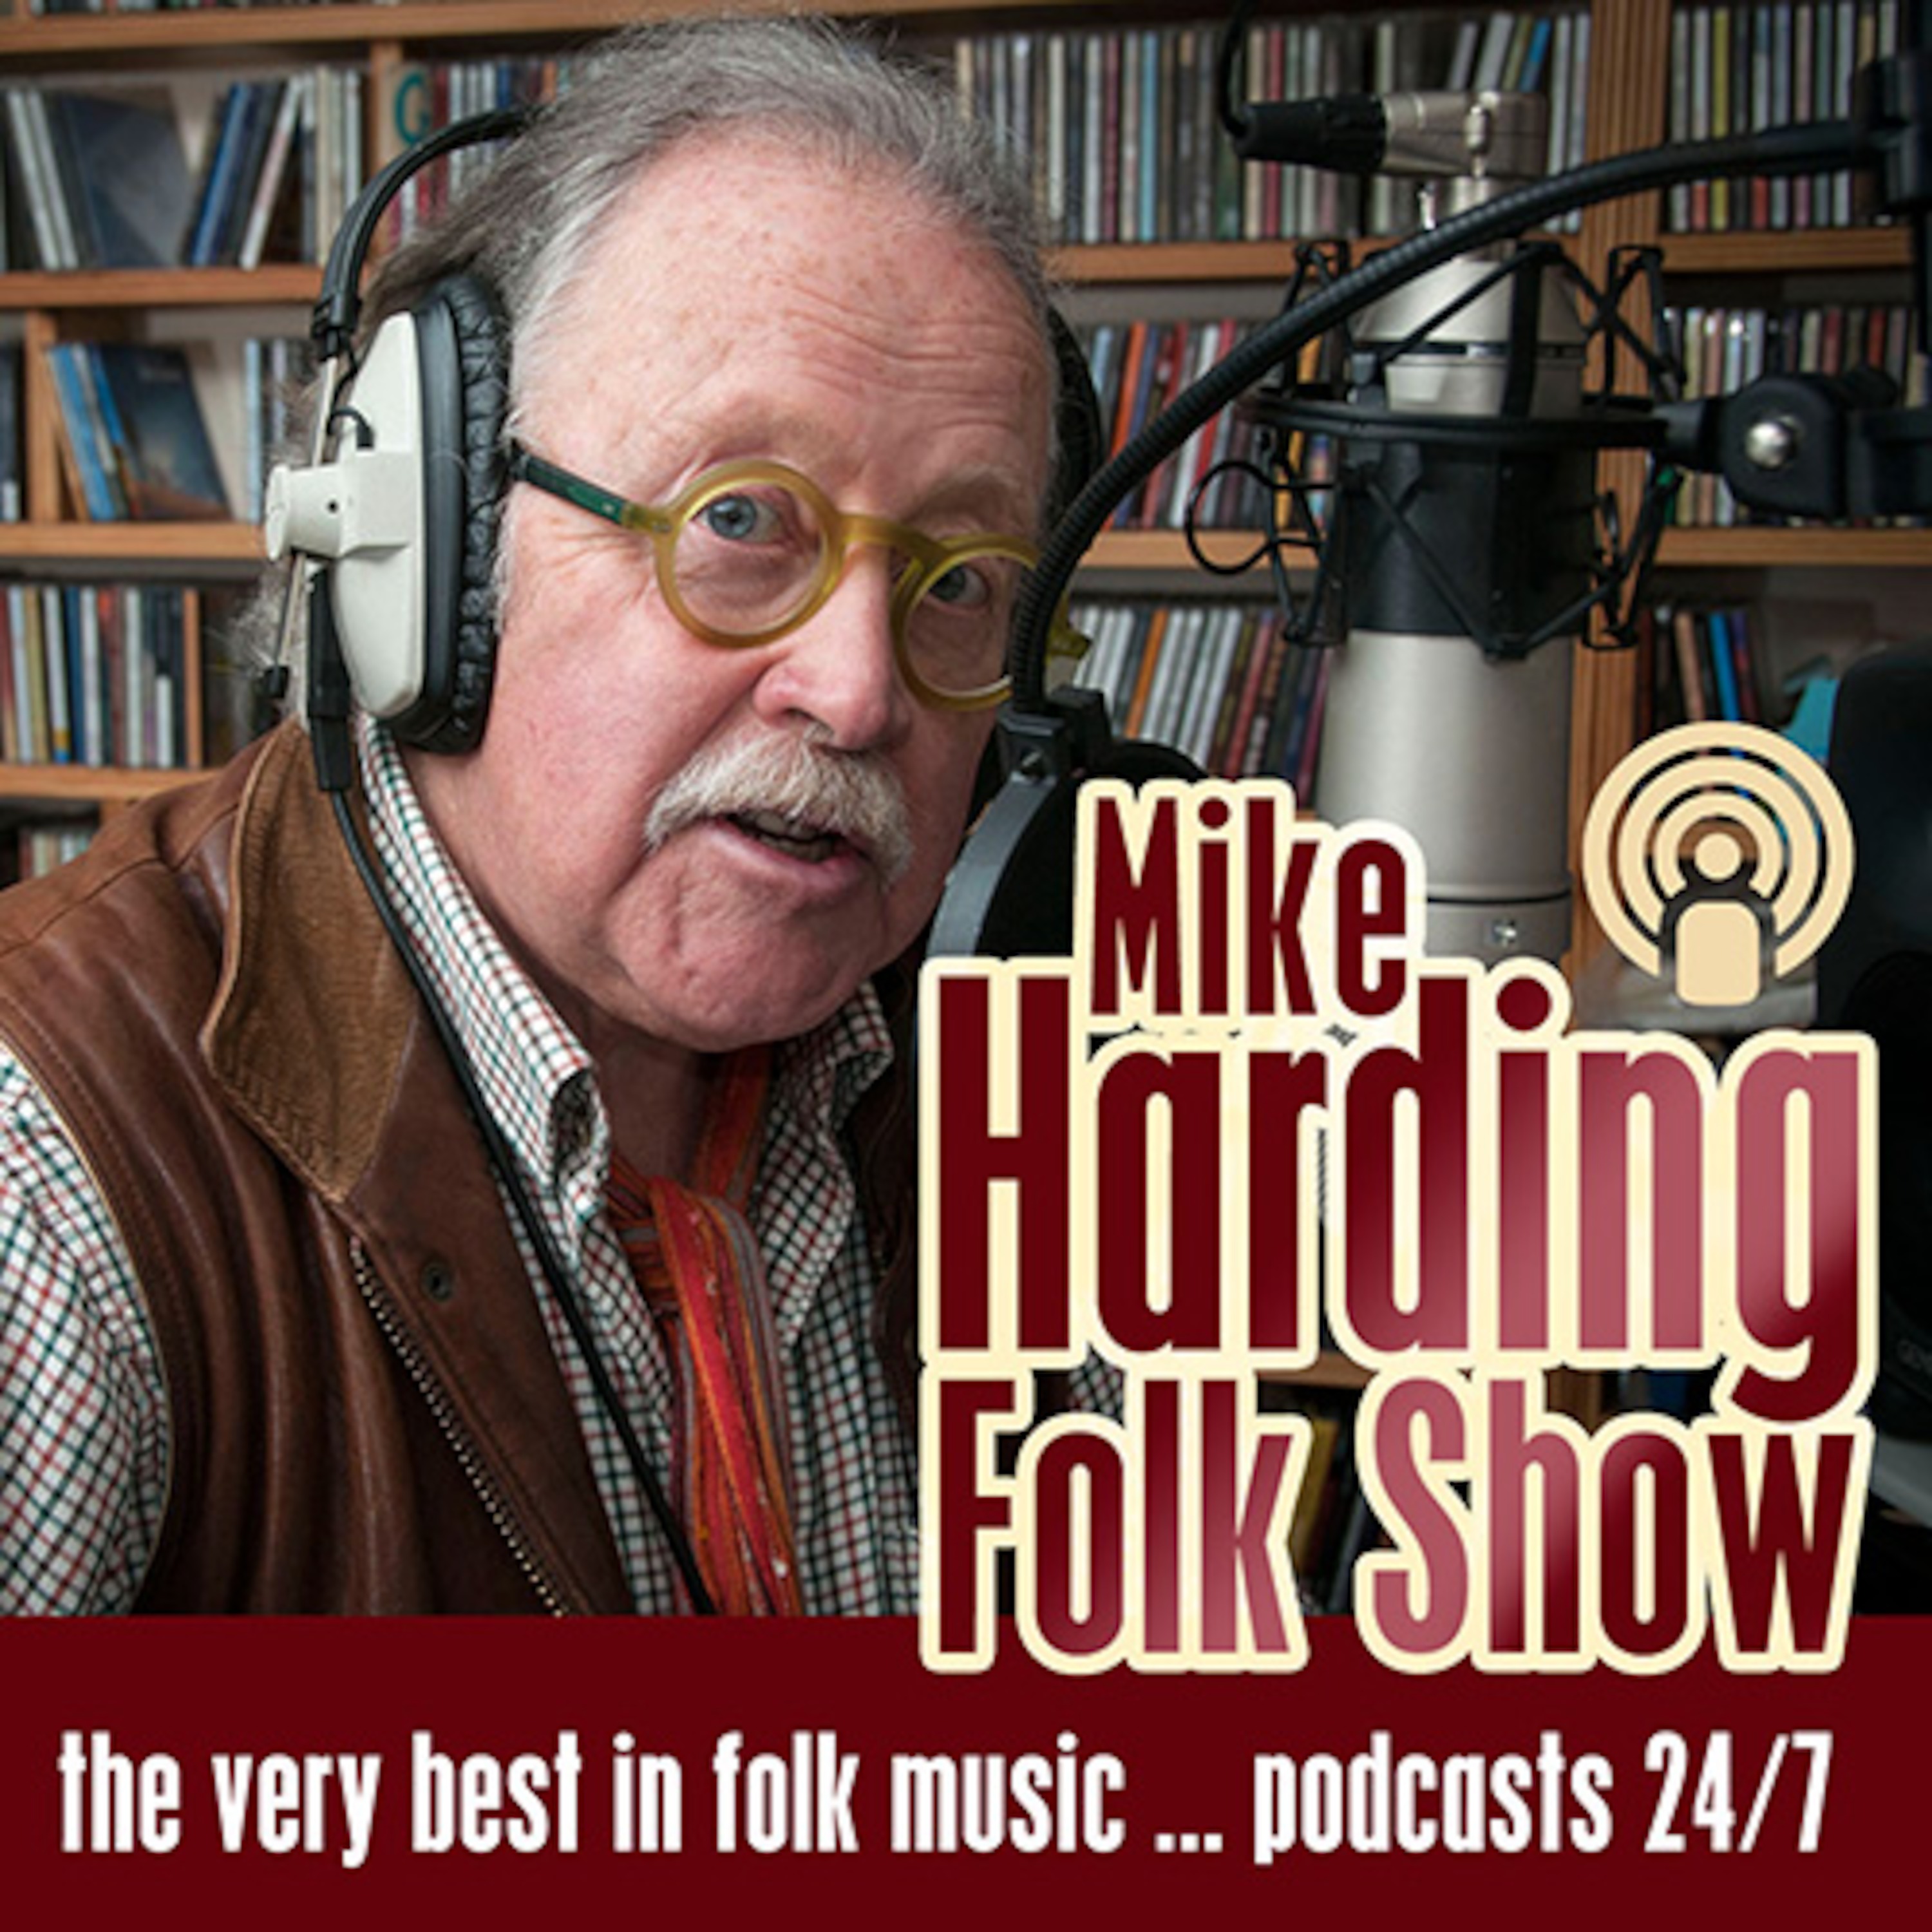 Mike Harding Folk Show 62